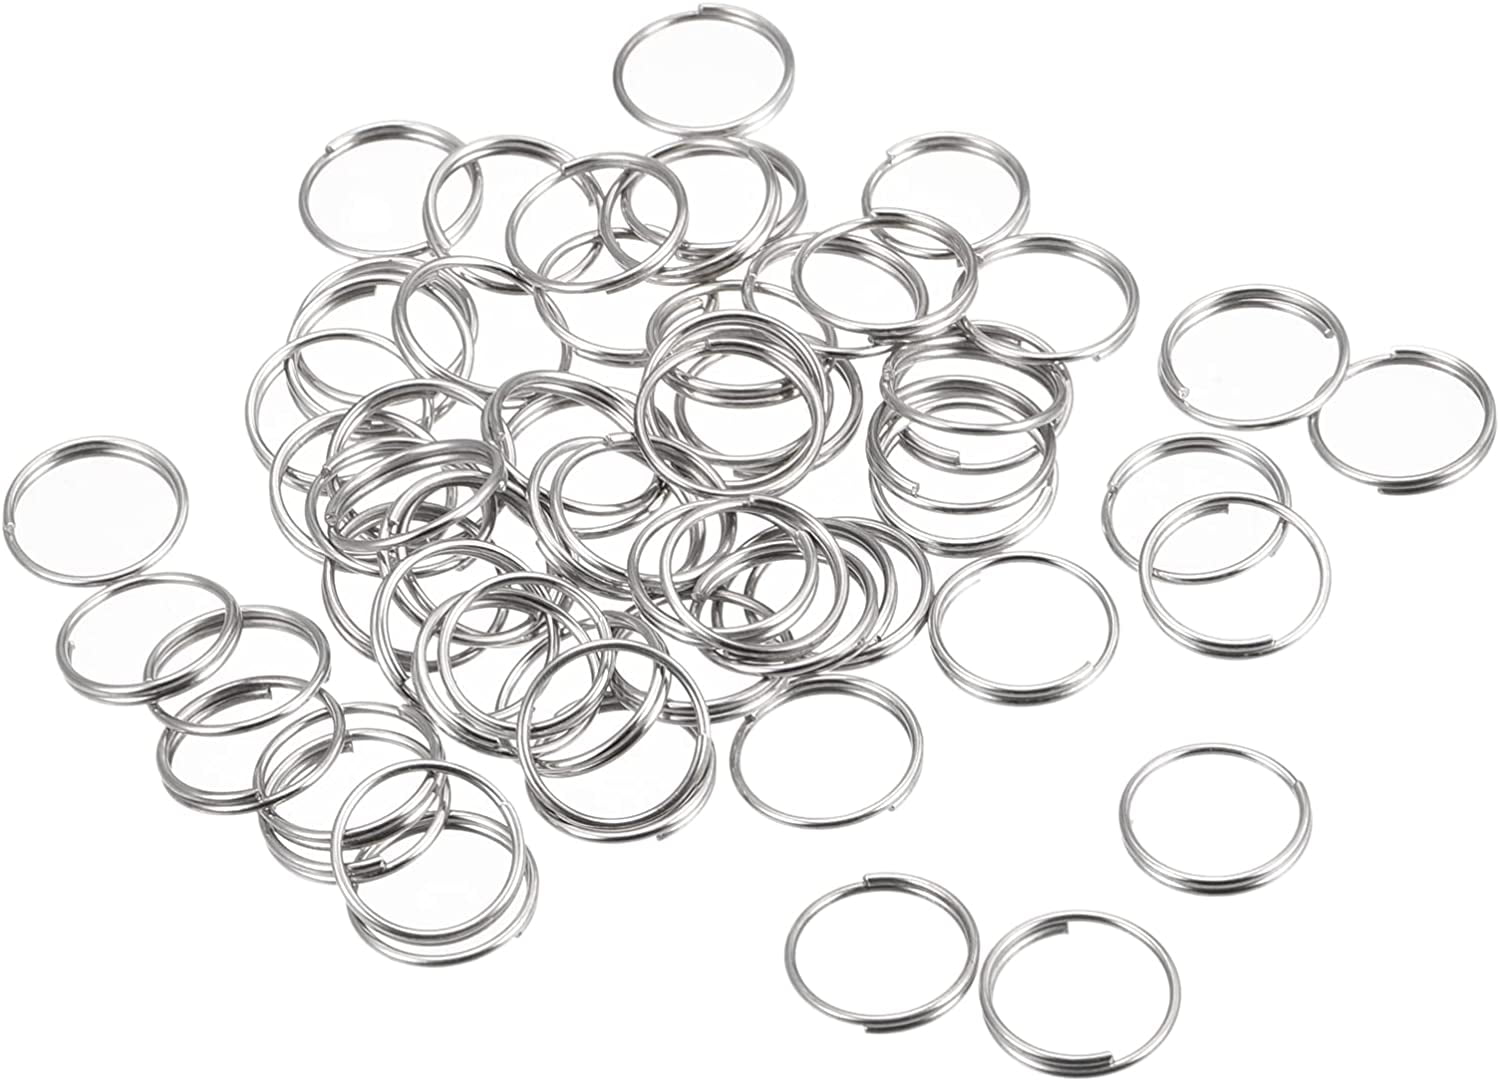 Aylifu 10mm Small Key Ring, 200 Pieces Mini Key Chain Ring Metal Small Split Key Rings for Keys Organization, Connecting Jewelry DIY Craft - Silver